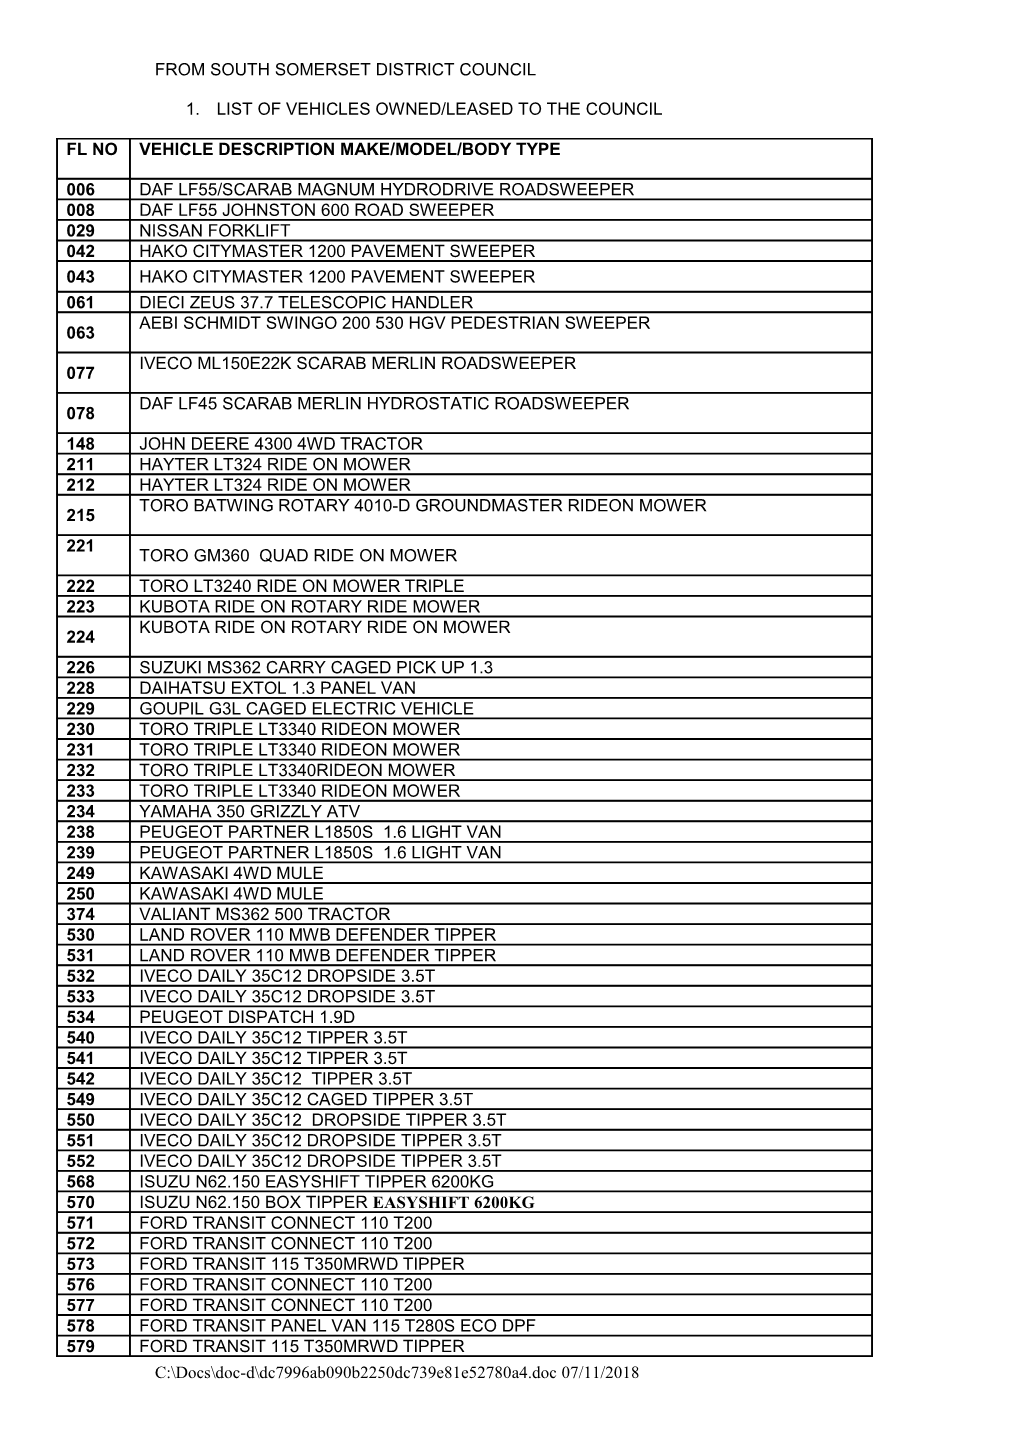 Ssds Vehicle List